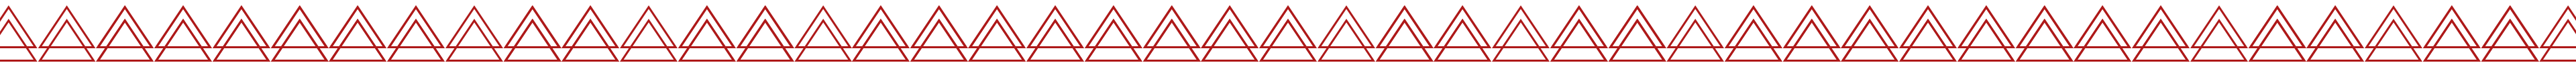 IACFS Symbol Musterzeile Dreieck nach oben